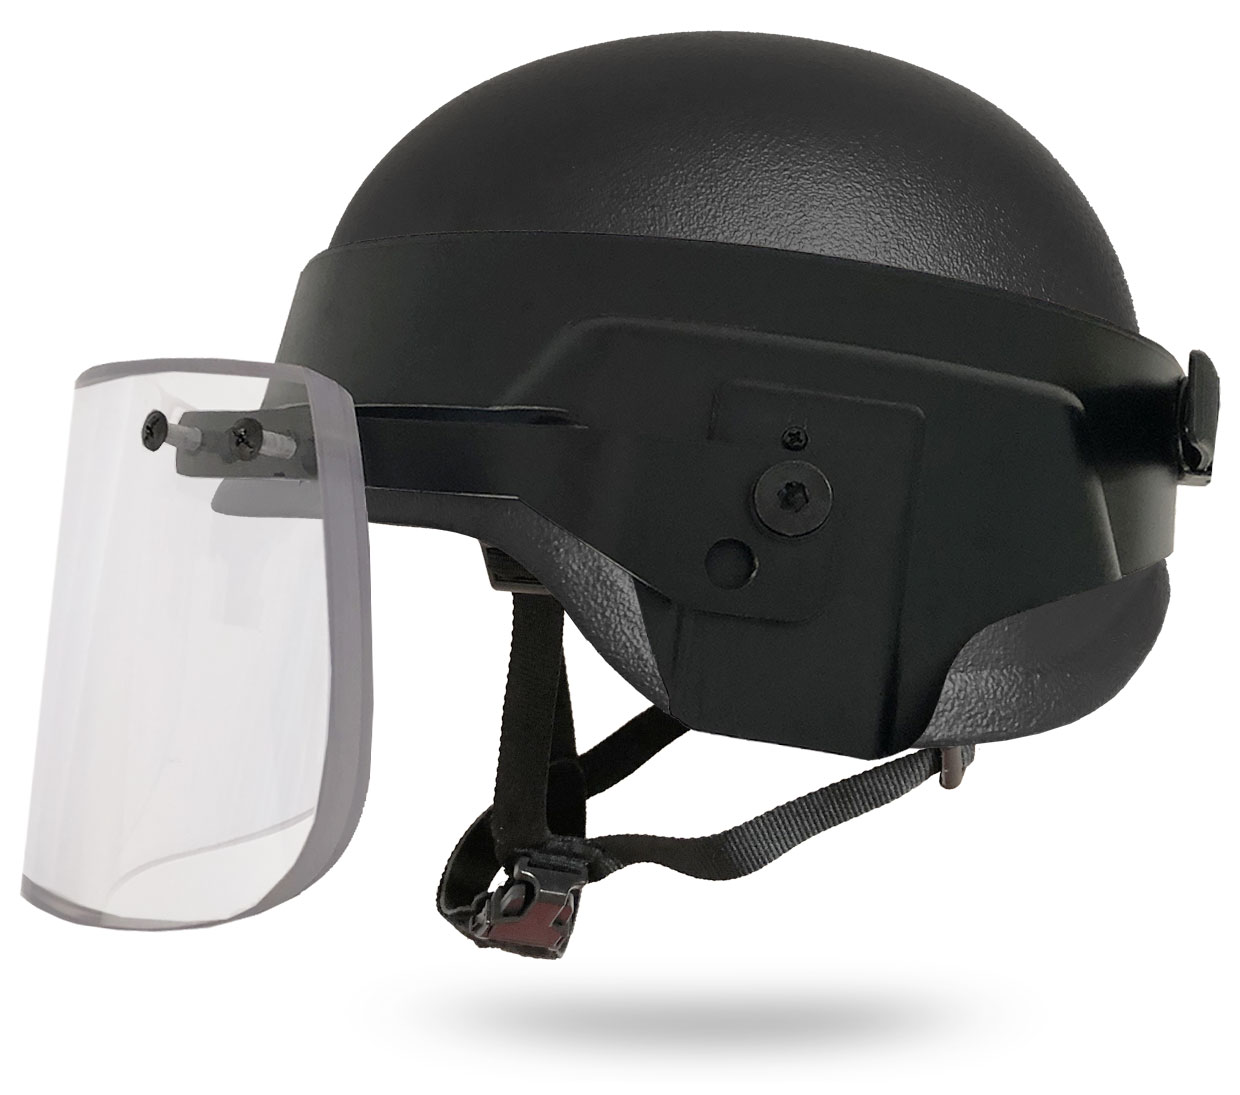 Helmet Accessory - Ballistic Visor- Retro Fit